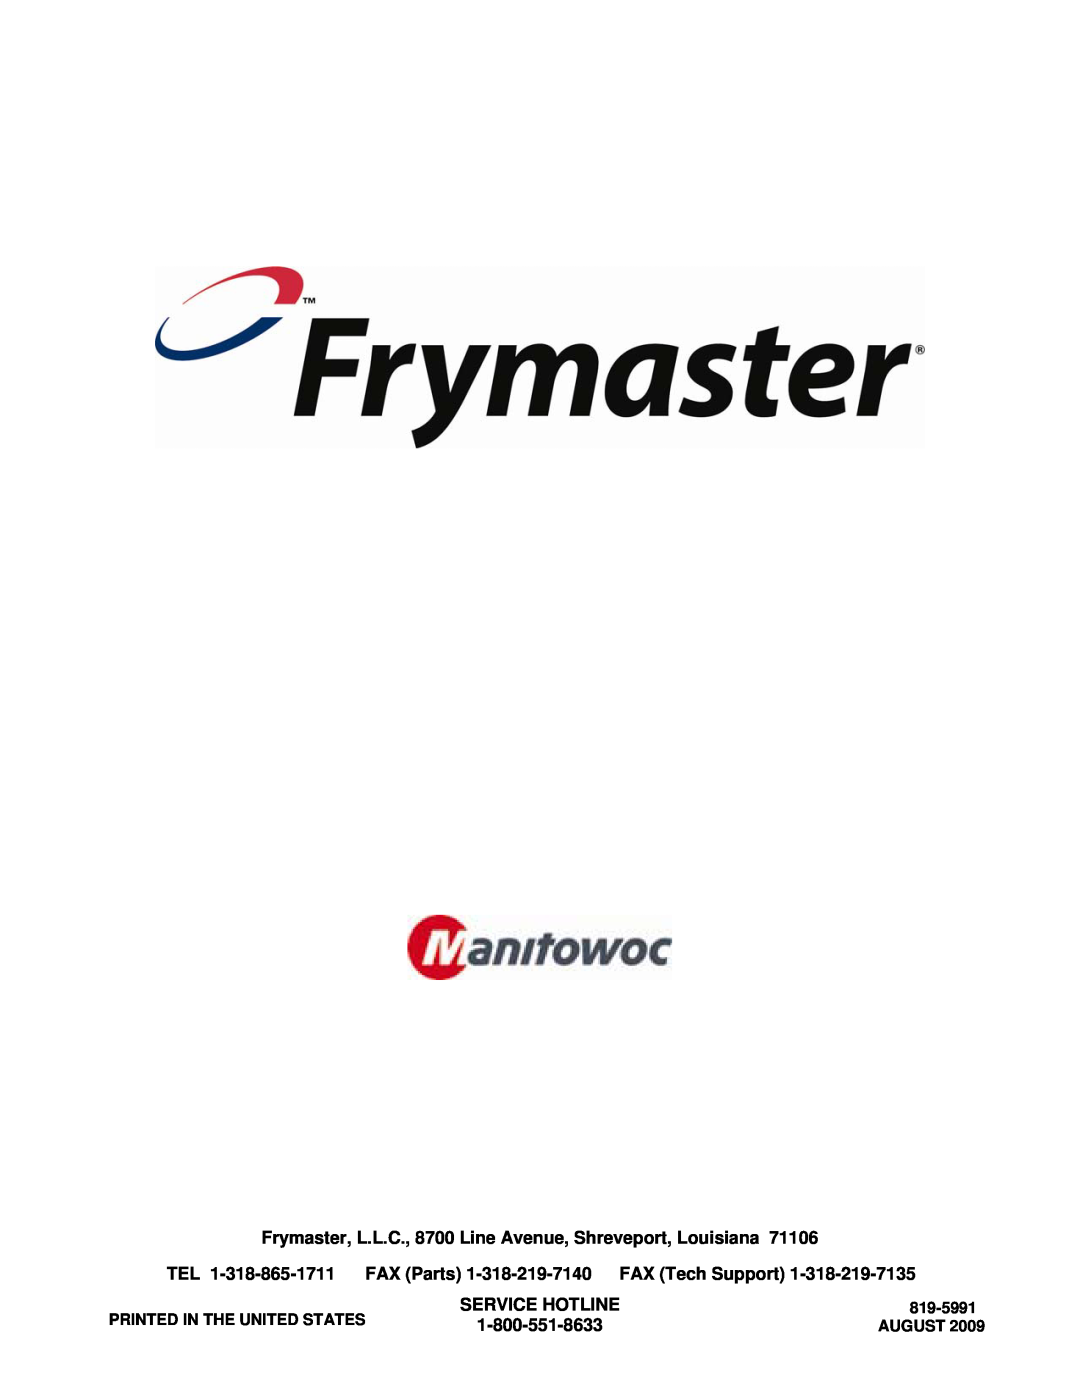 Frymaster H55 operation manual Service Hotline, 819-5991, August 